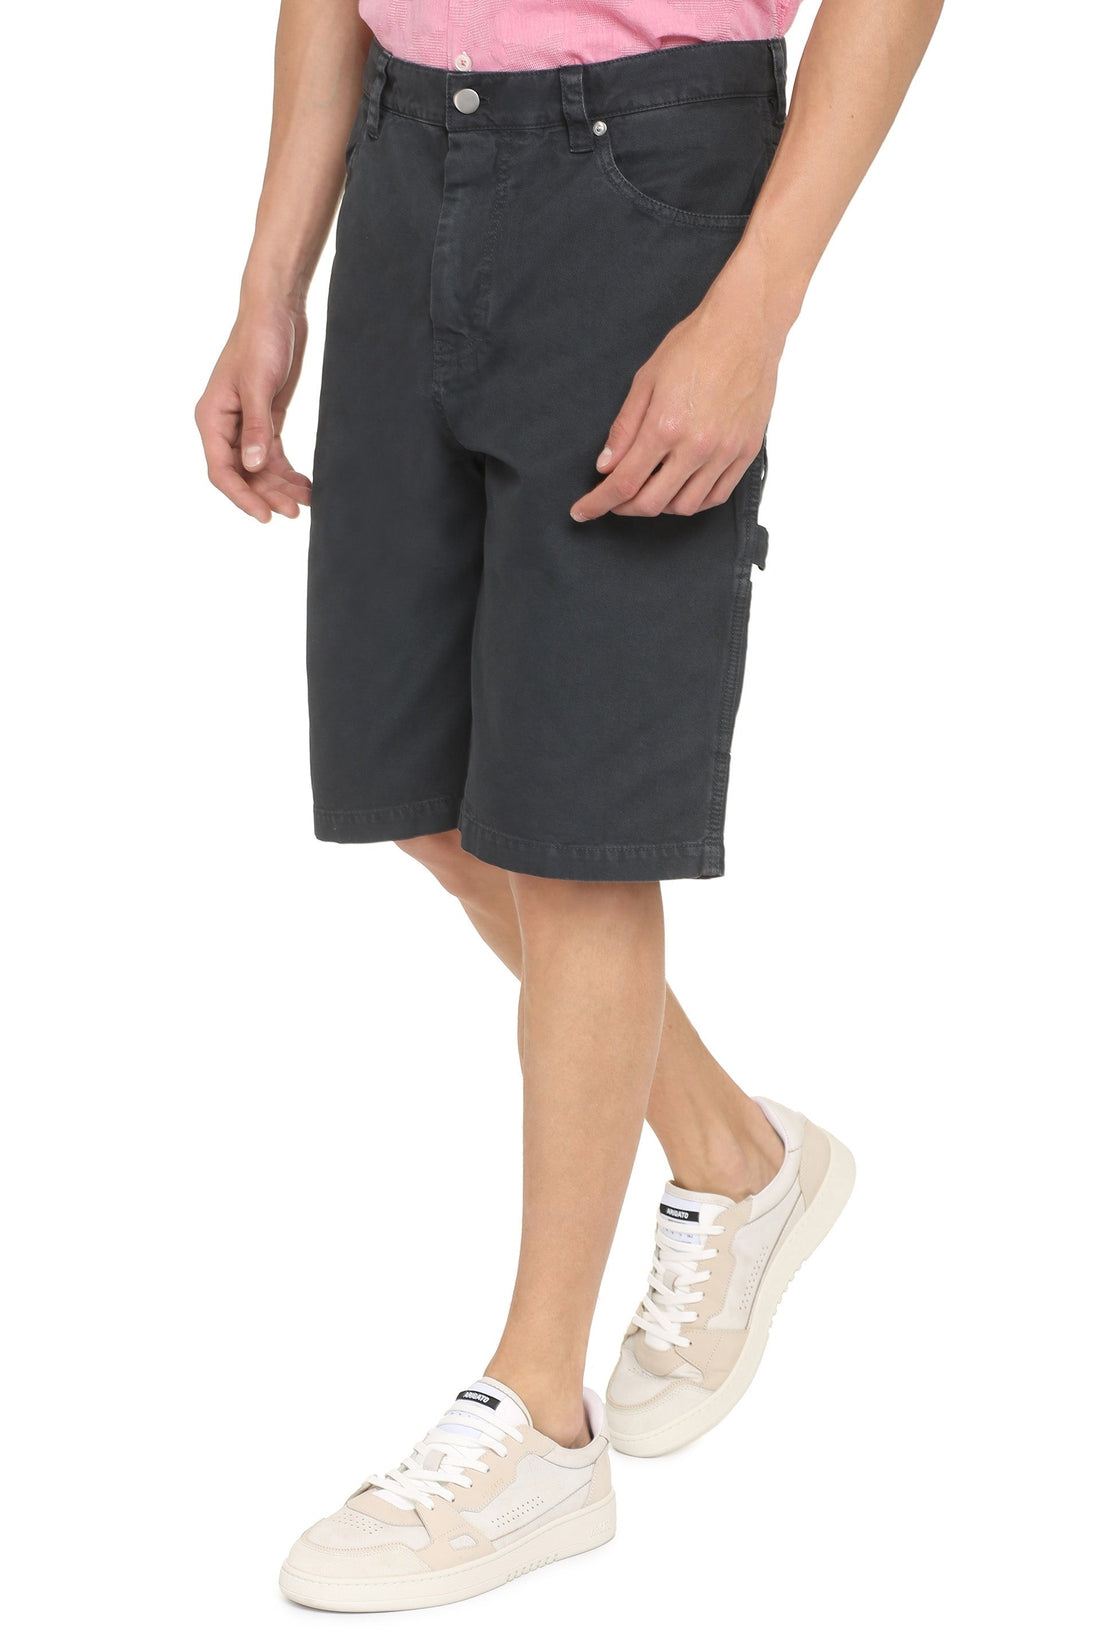 Axel Arigato-OUTLET-SALE-Gear cotton bermuda shorts-ARCHIVIST